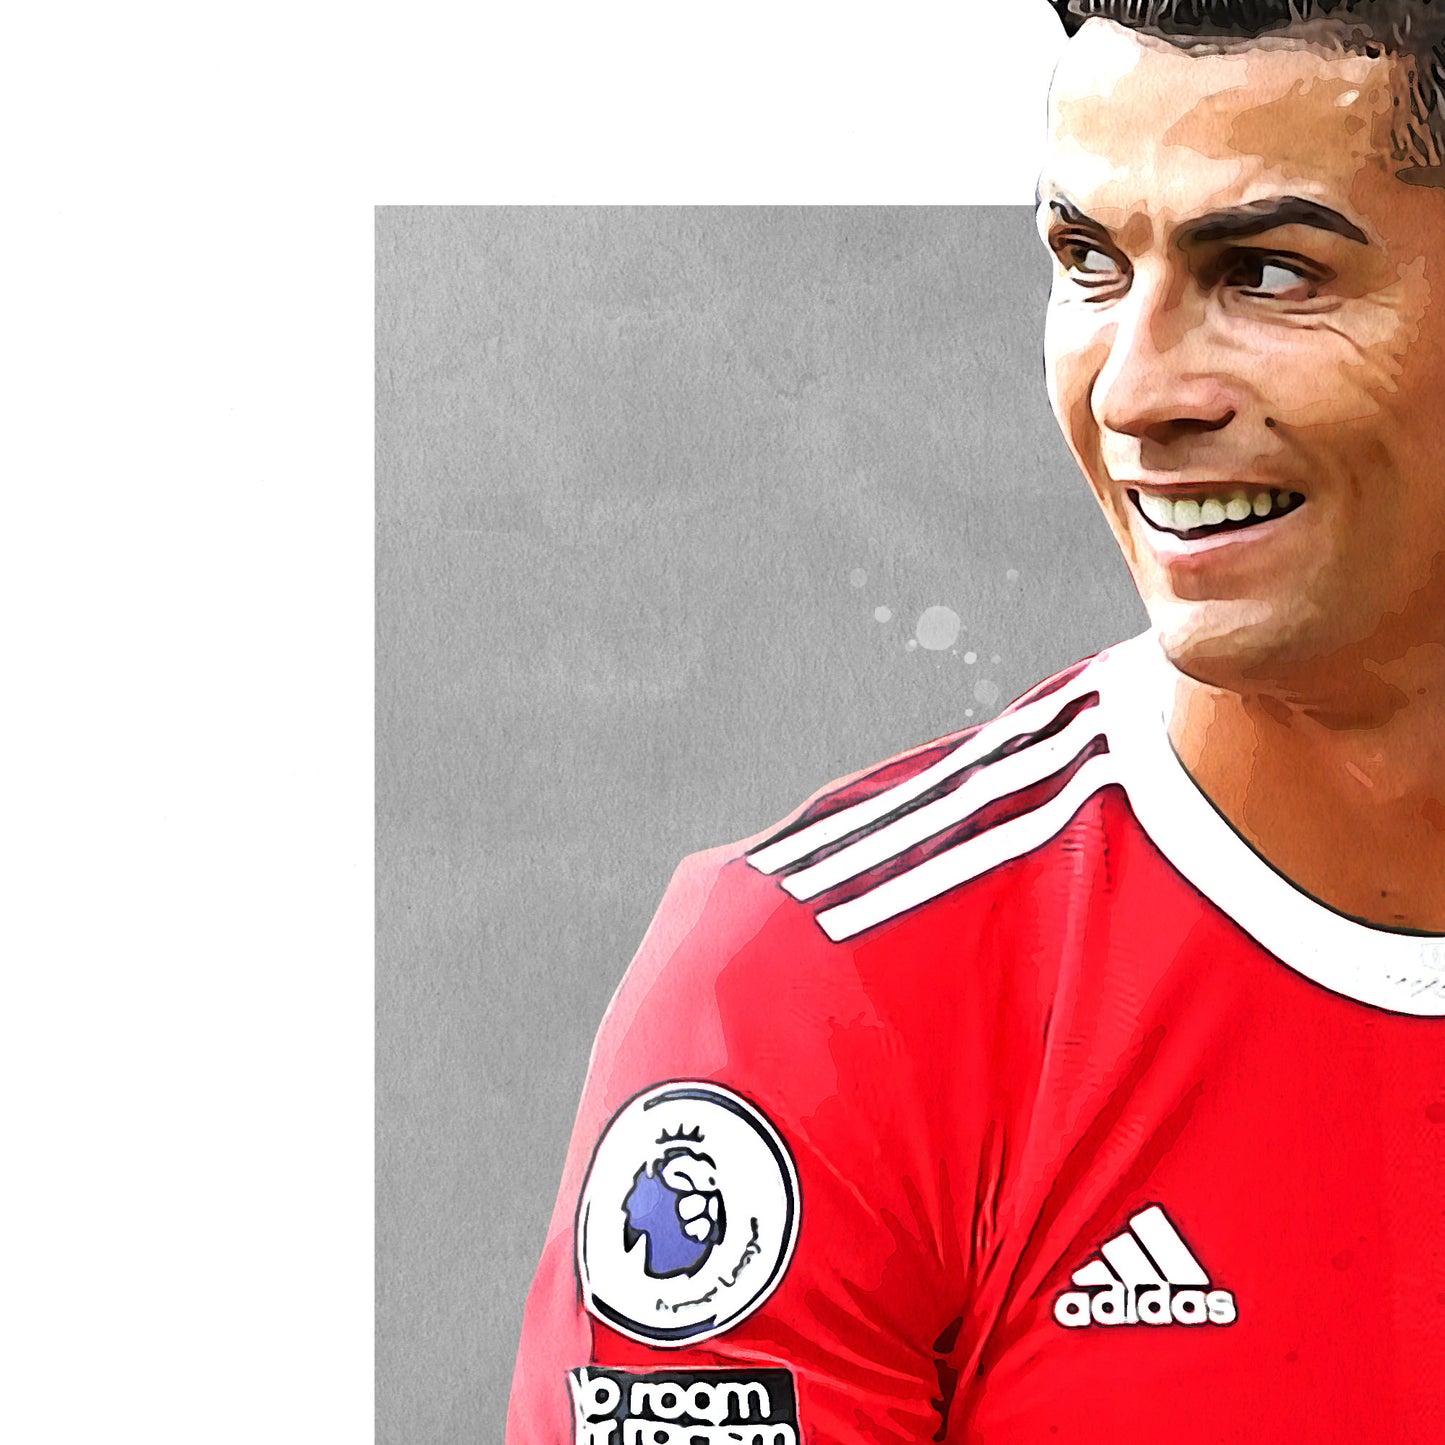 Ronaldo Manchester